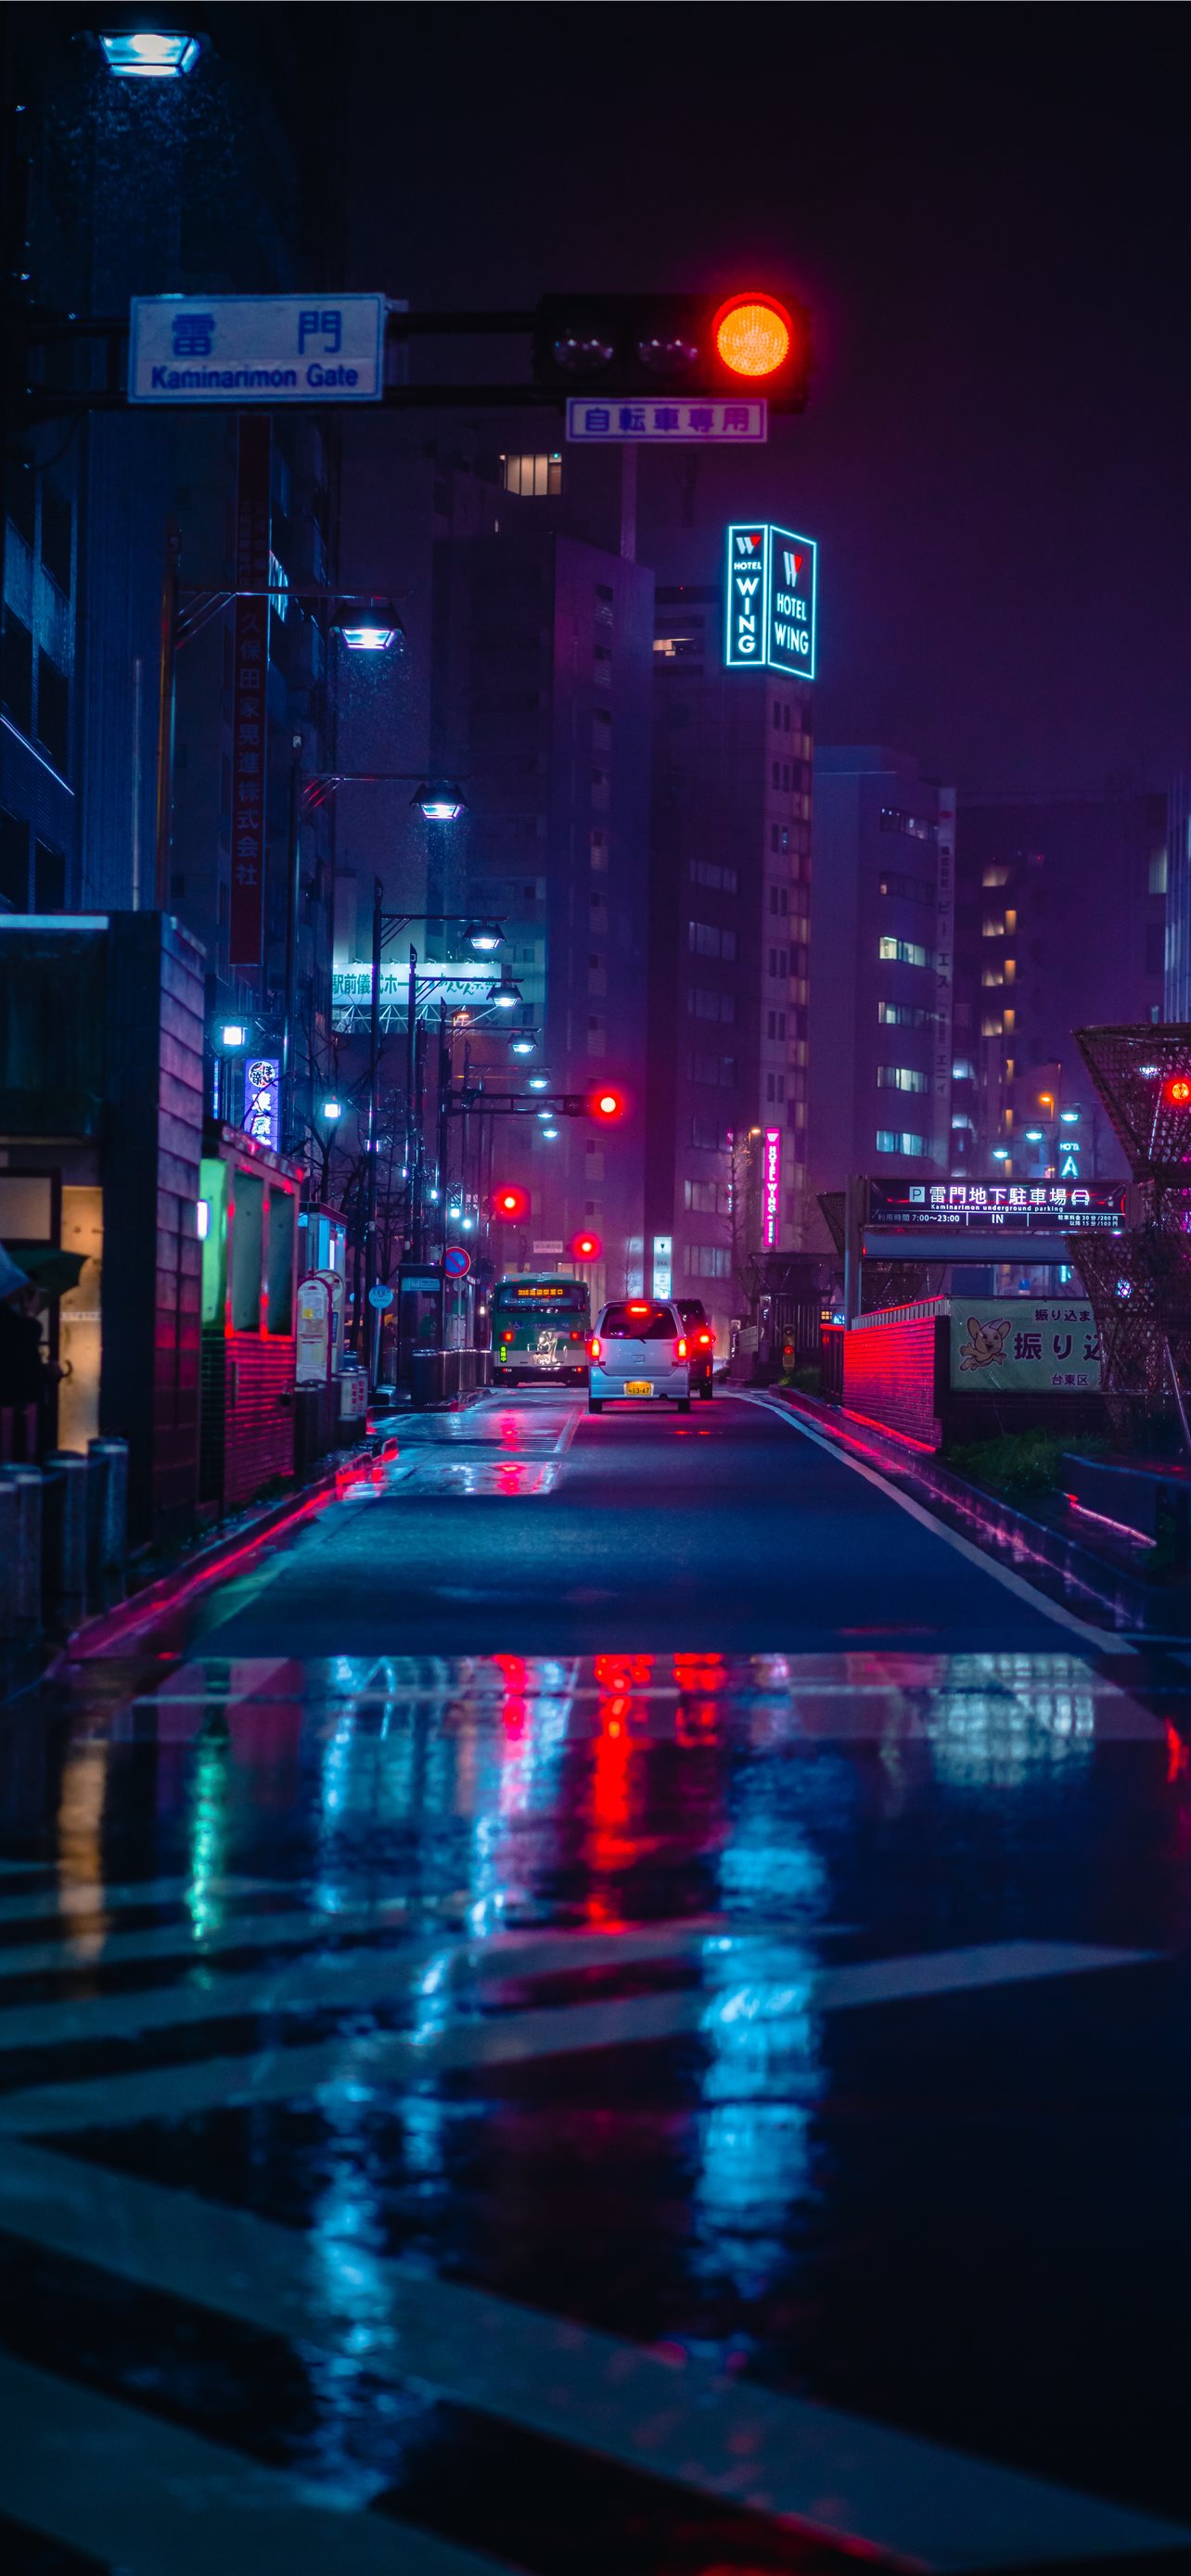 Tokyo by night near Asakusa iPhone wallpaper 